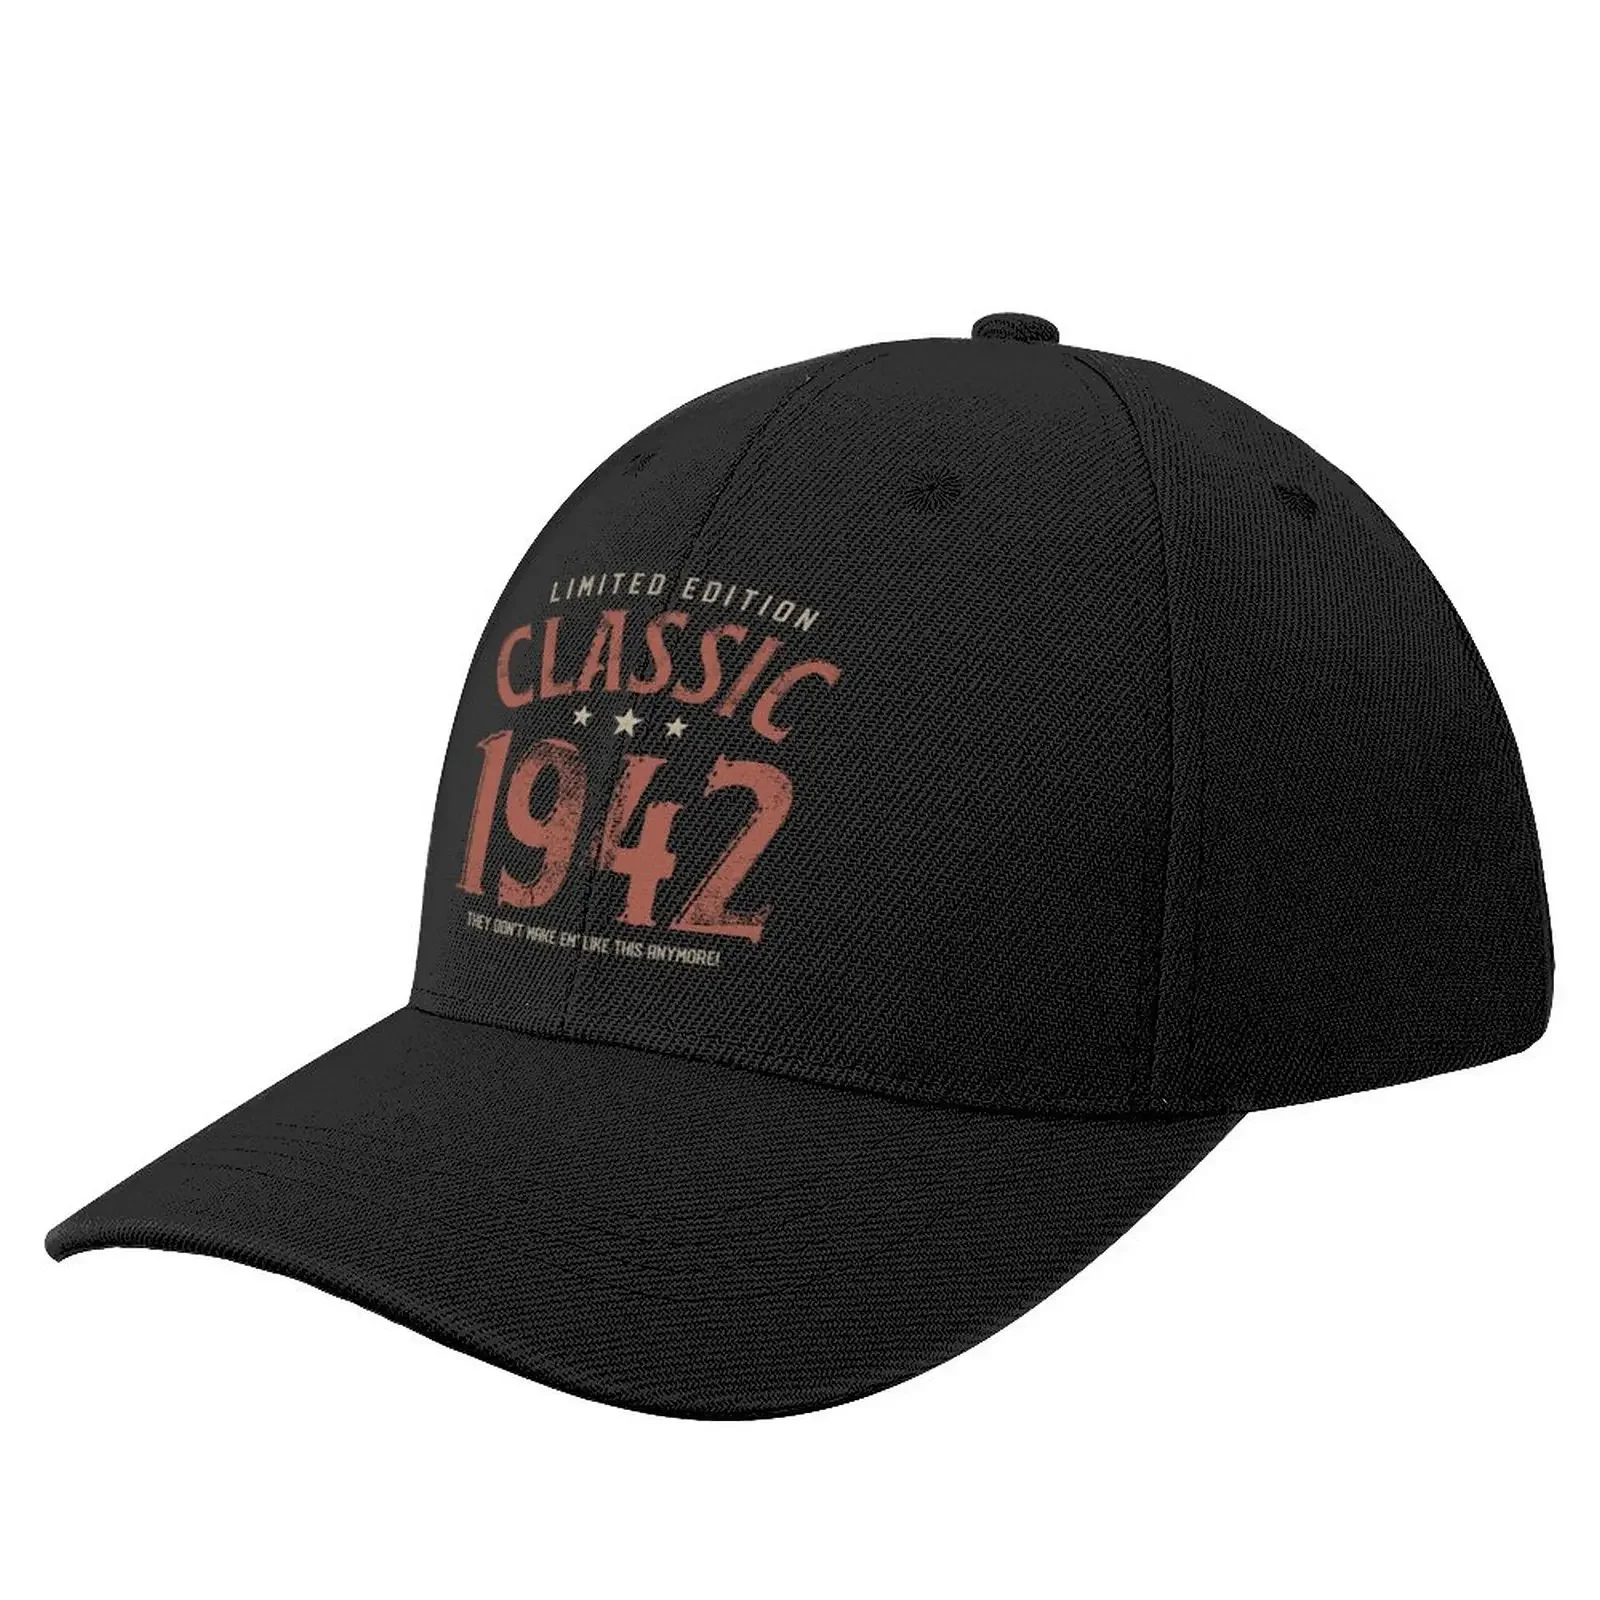 

Classic 1942 - 80th birthday Retro Vintage Baseball Cap Golf Cap New Hat Hood party hats Caps For Men Women'S